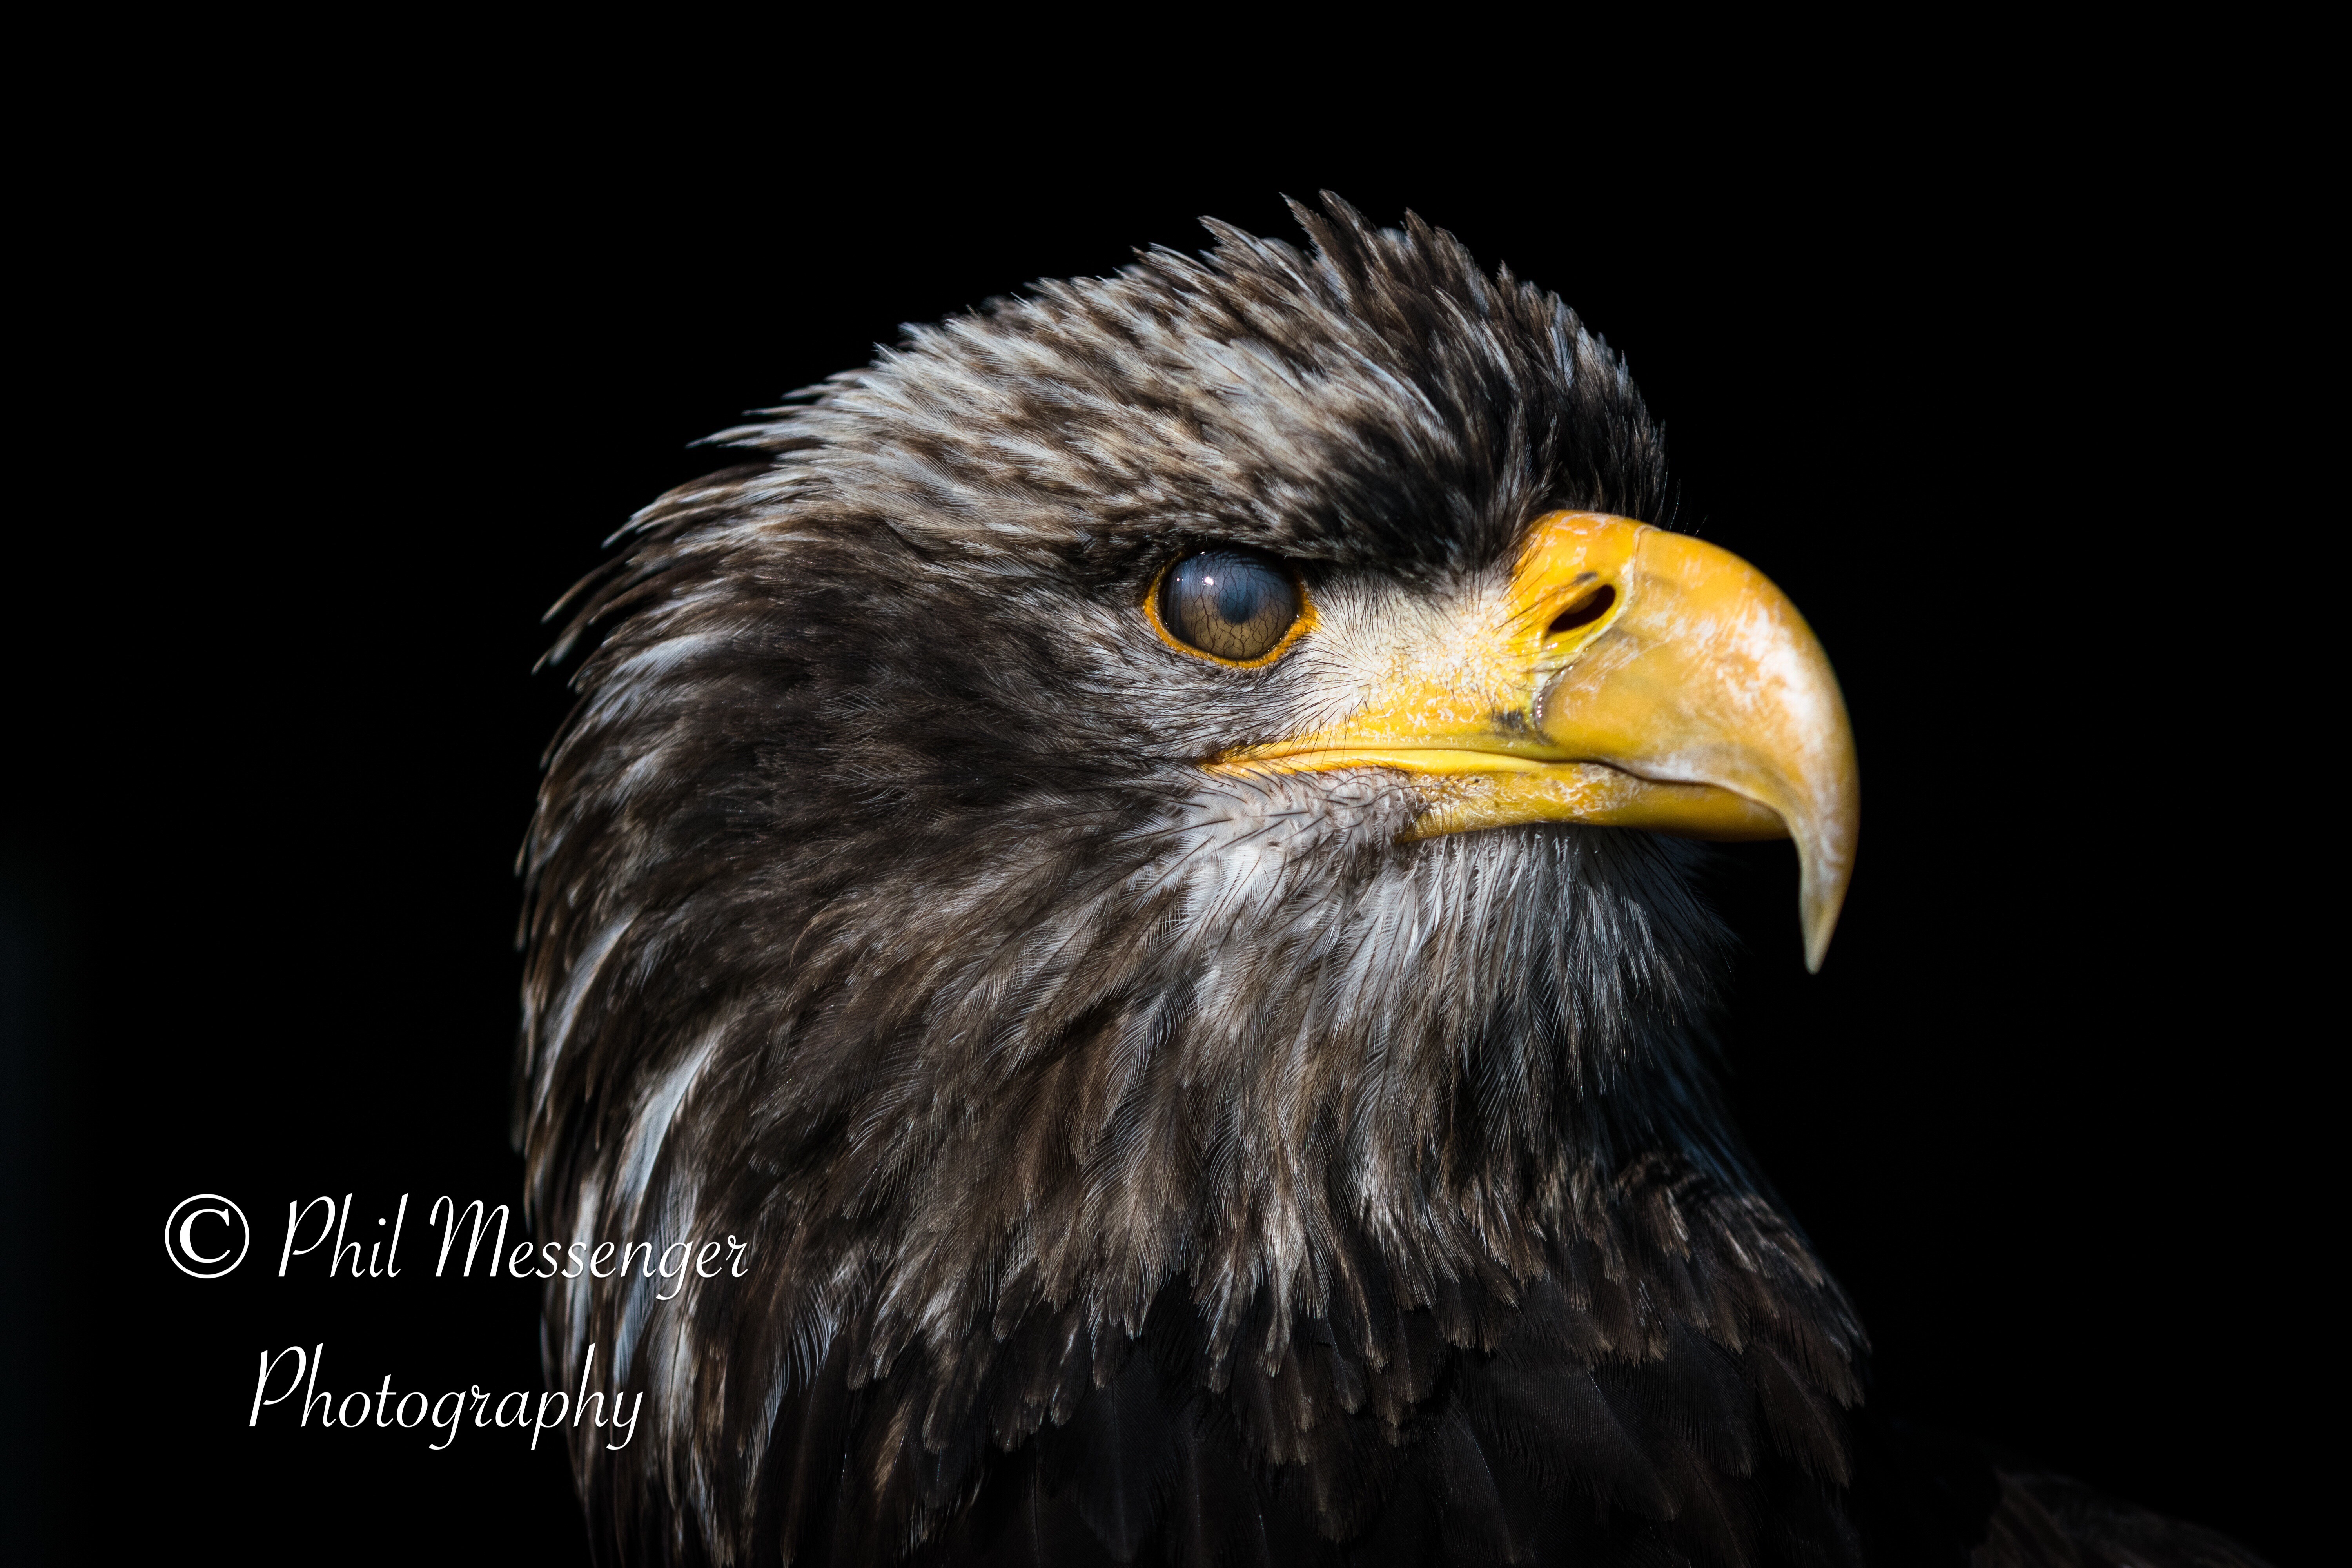 Eagle portrait taken at Millets falconry centre, Oxfordshire.